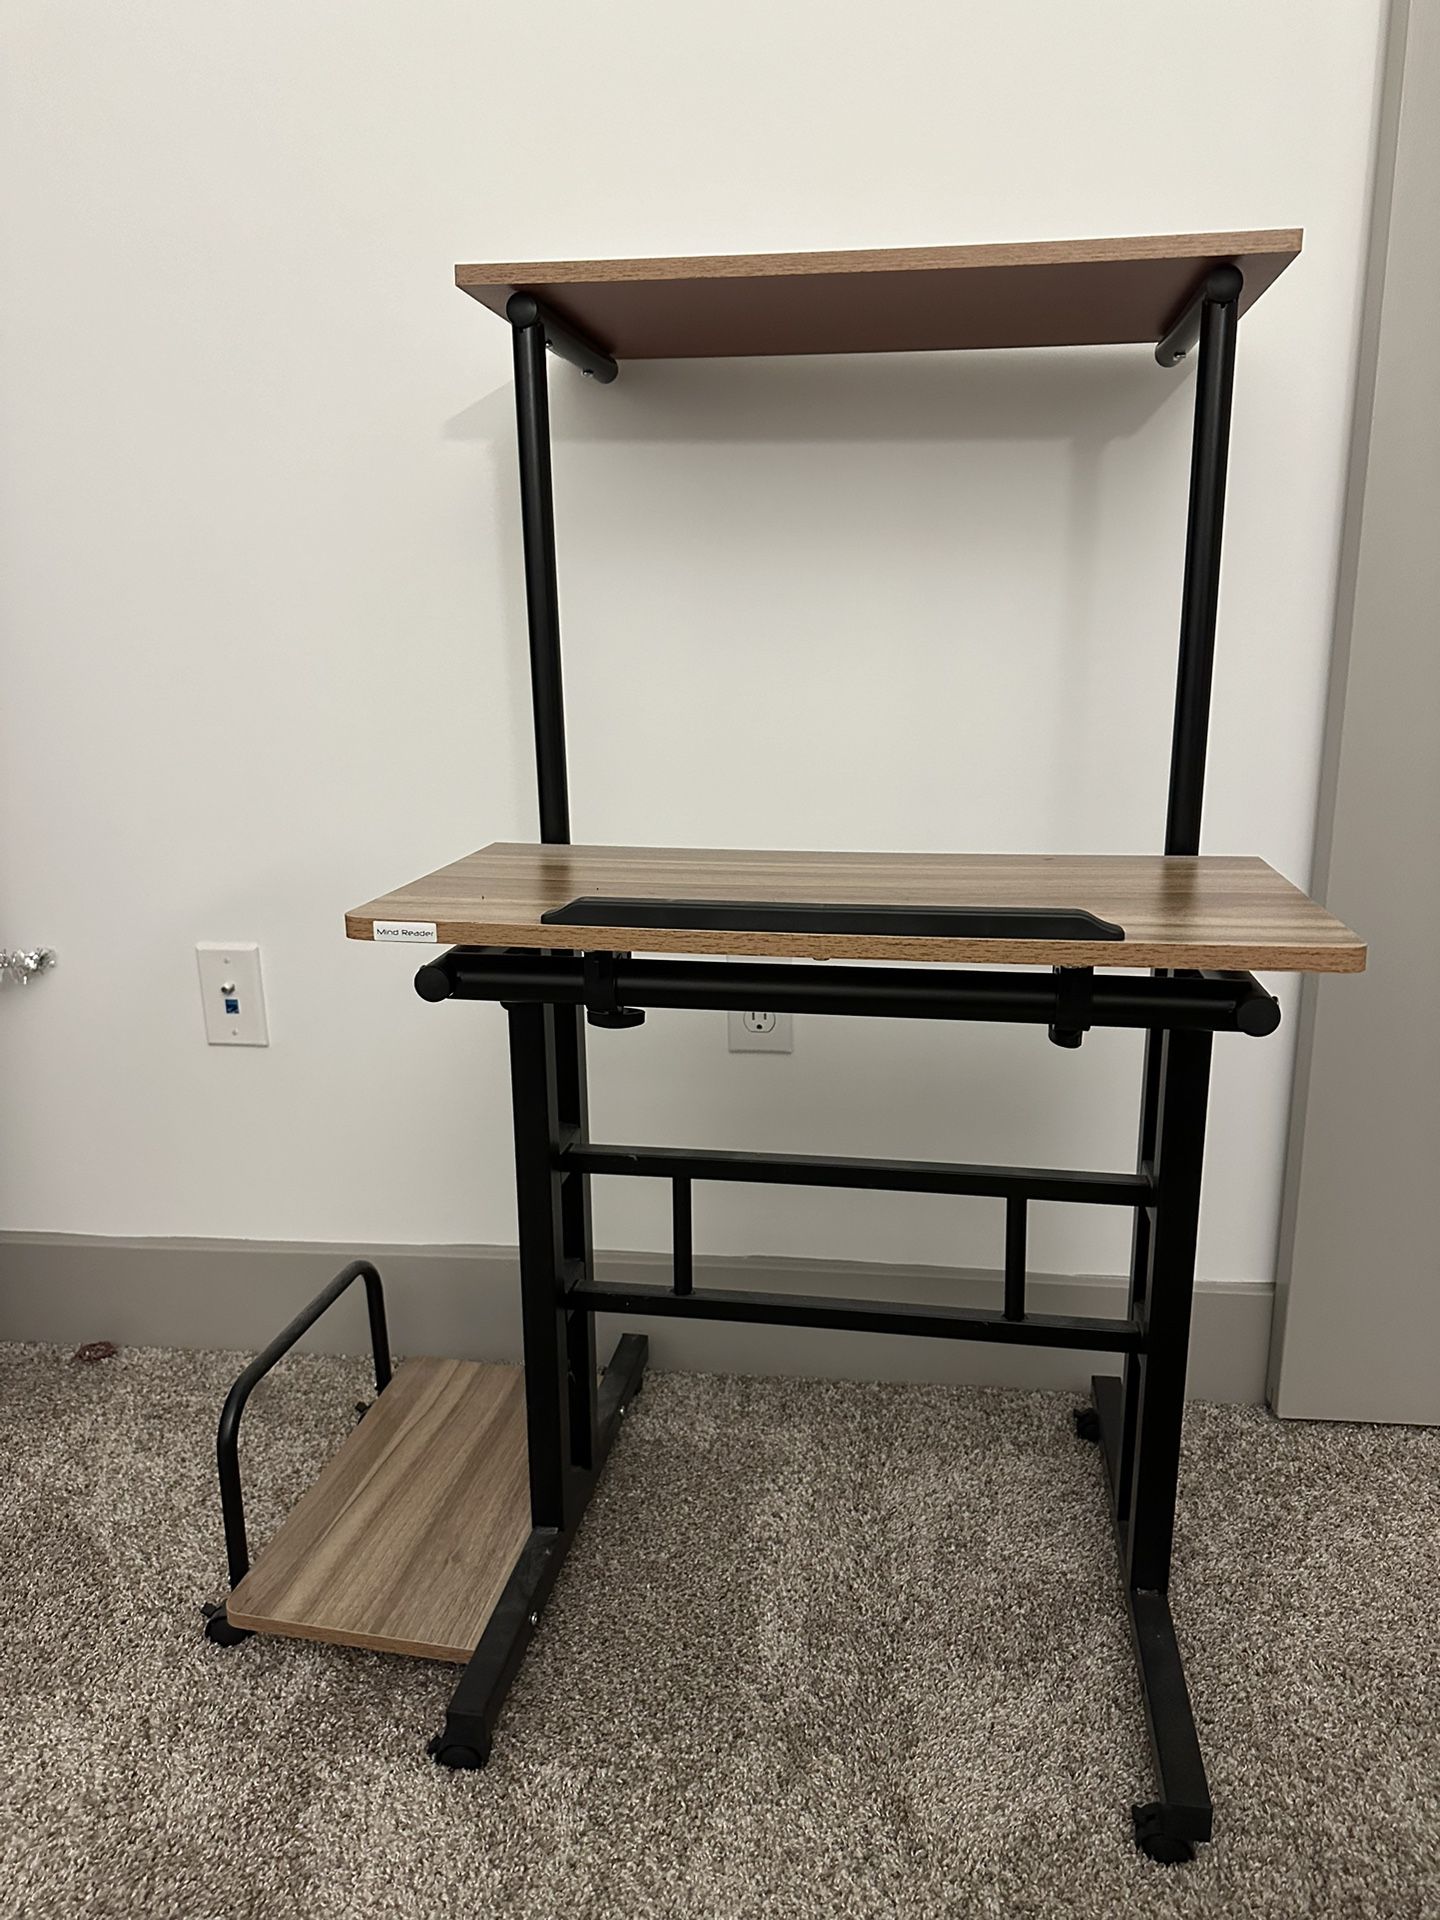 Adjustable Standing Desk With Wheels